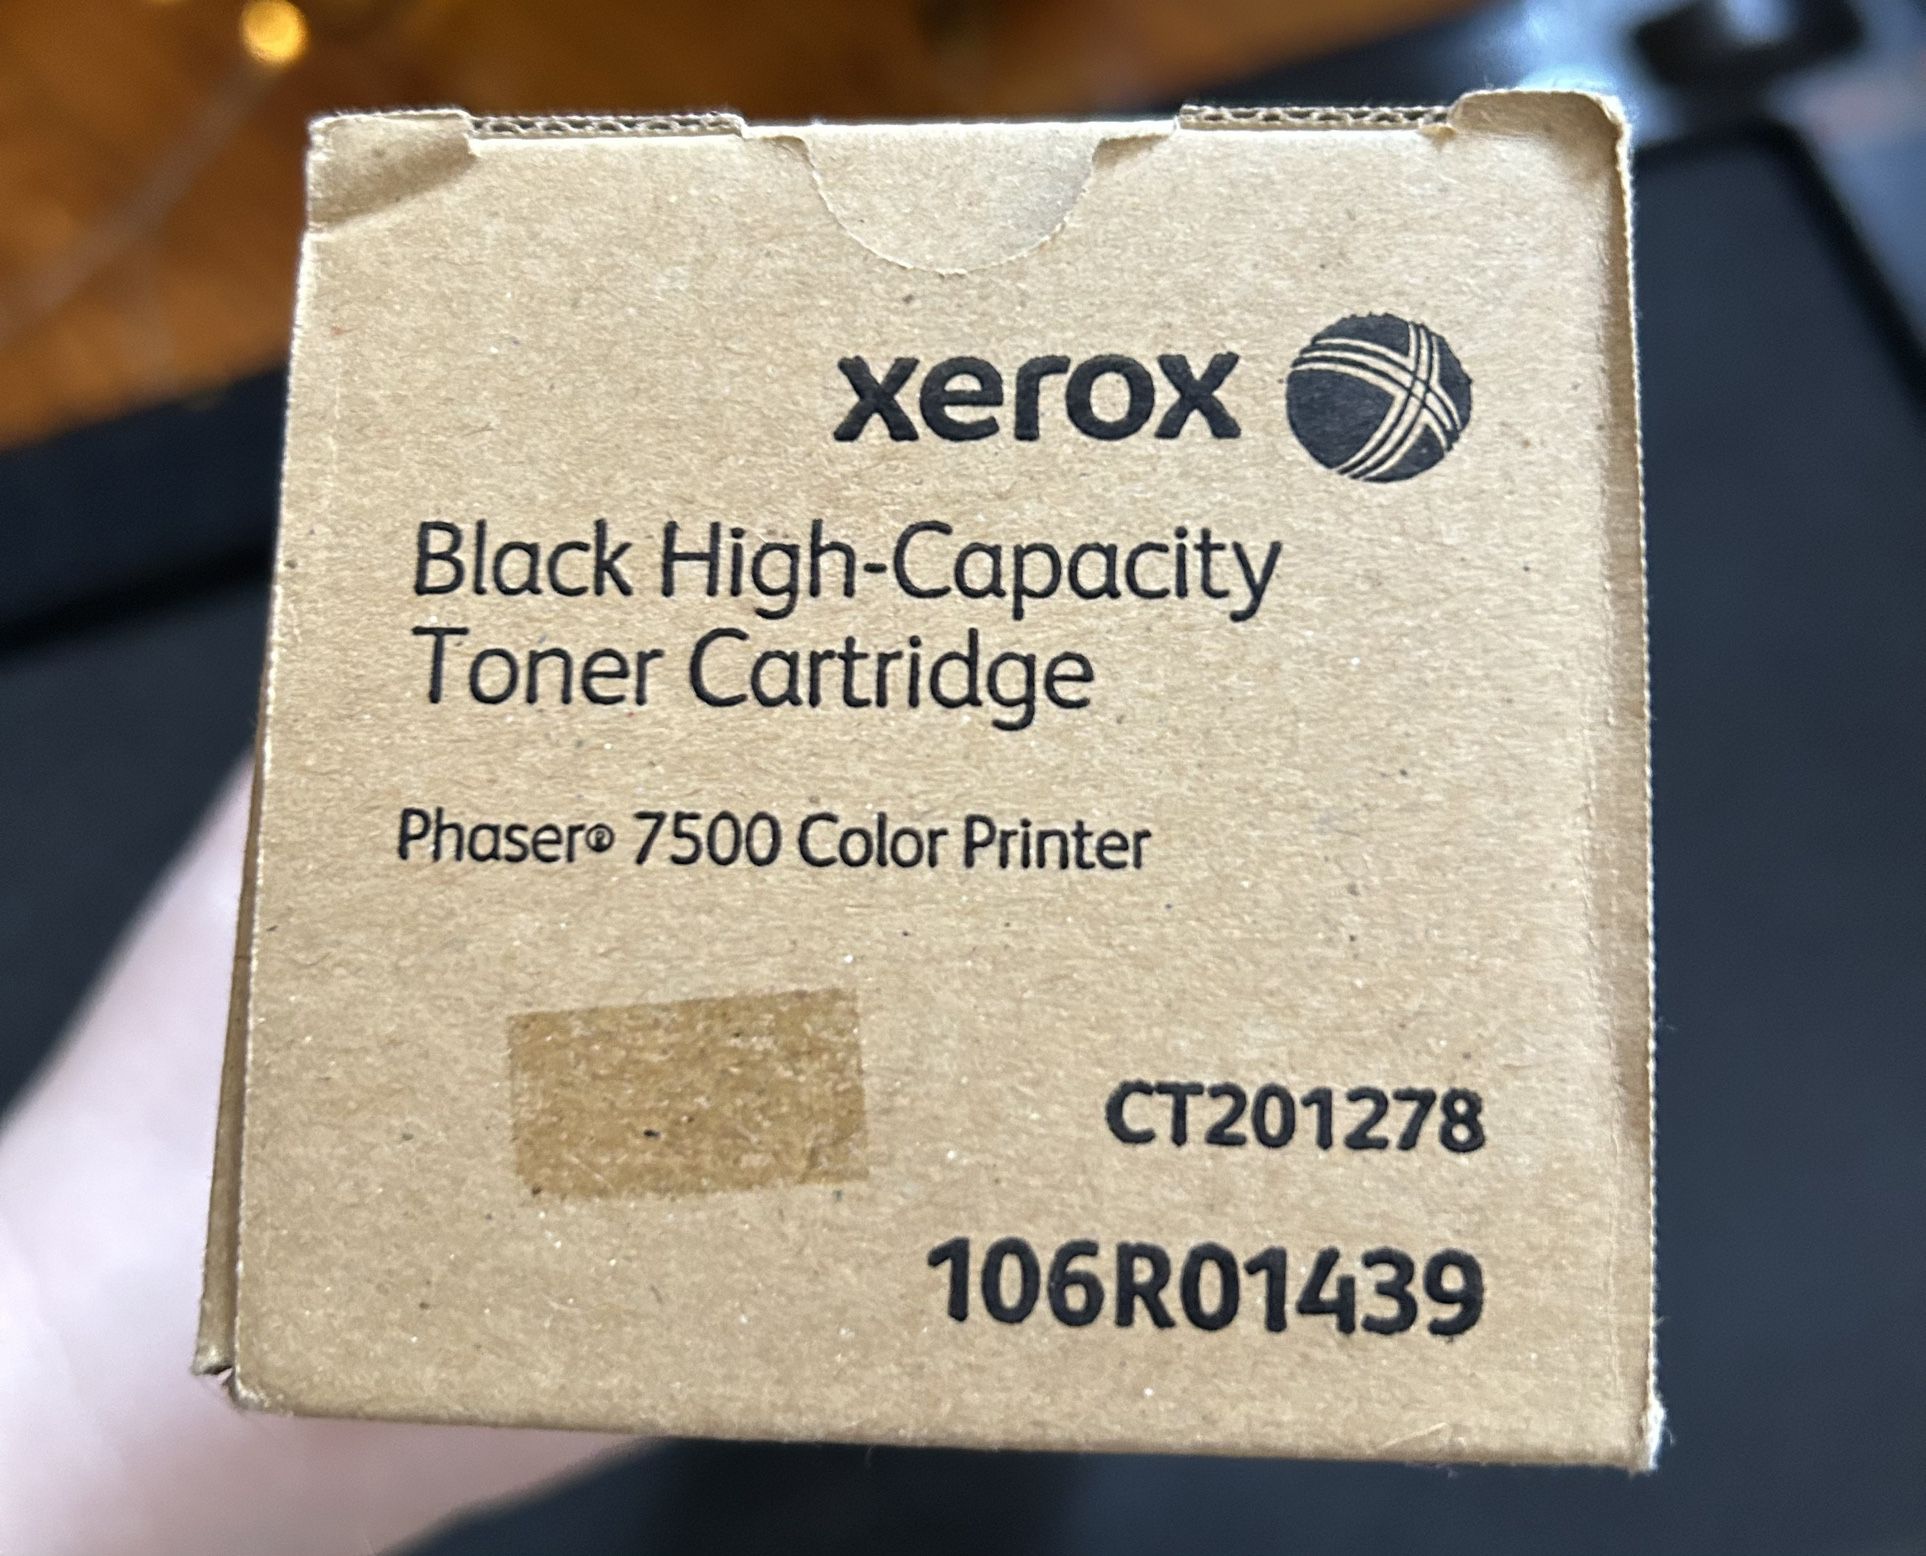 NEW IN BOX Xerox Black High-Capacity Toner Cartridge Phaser 7500 Color Printer